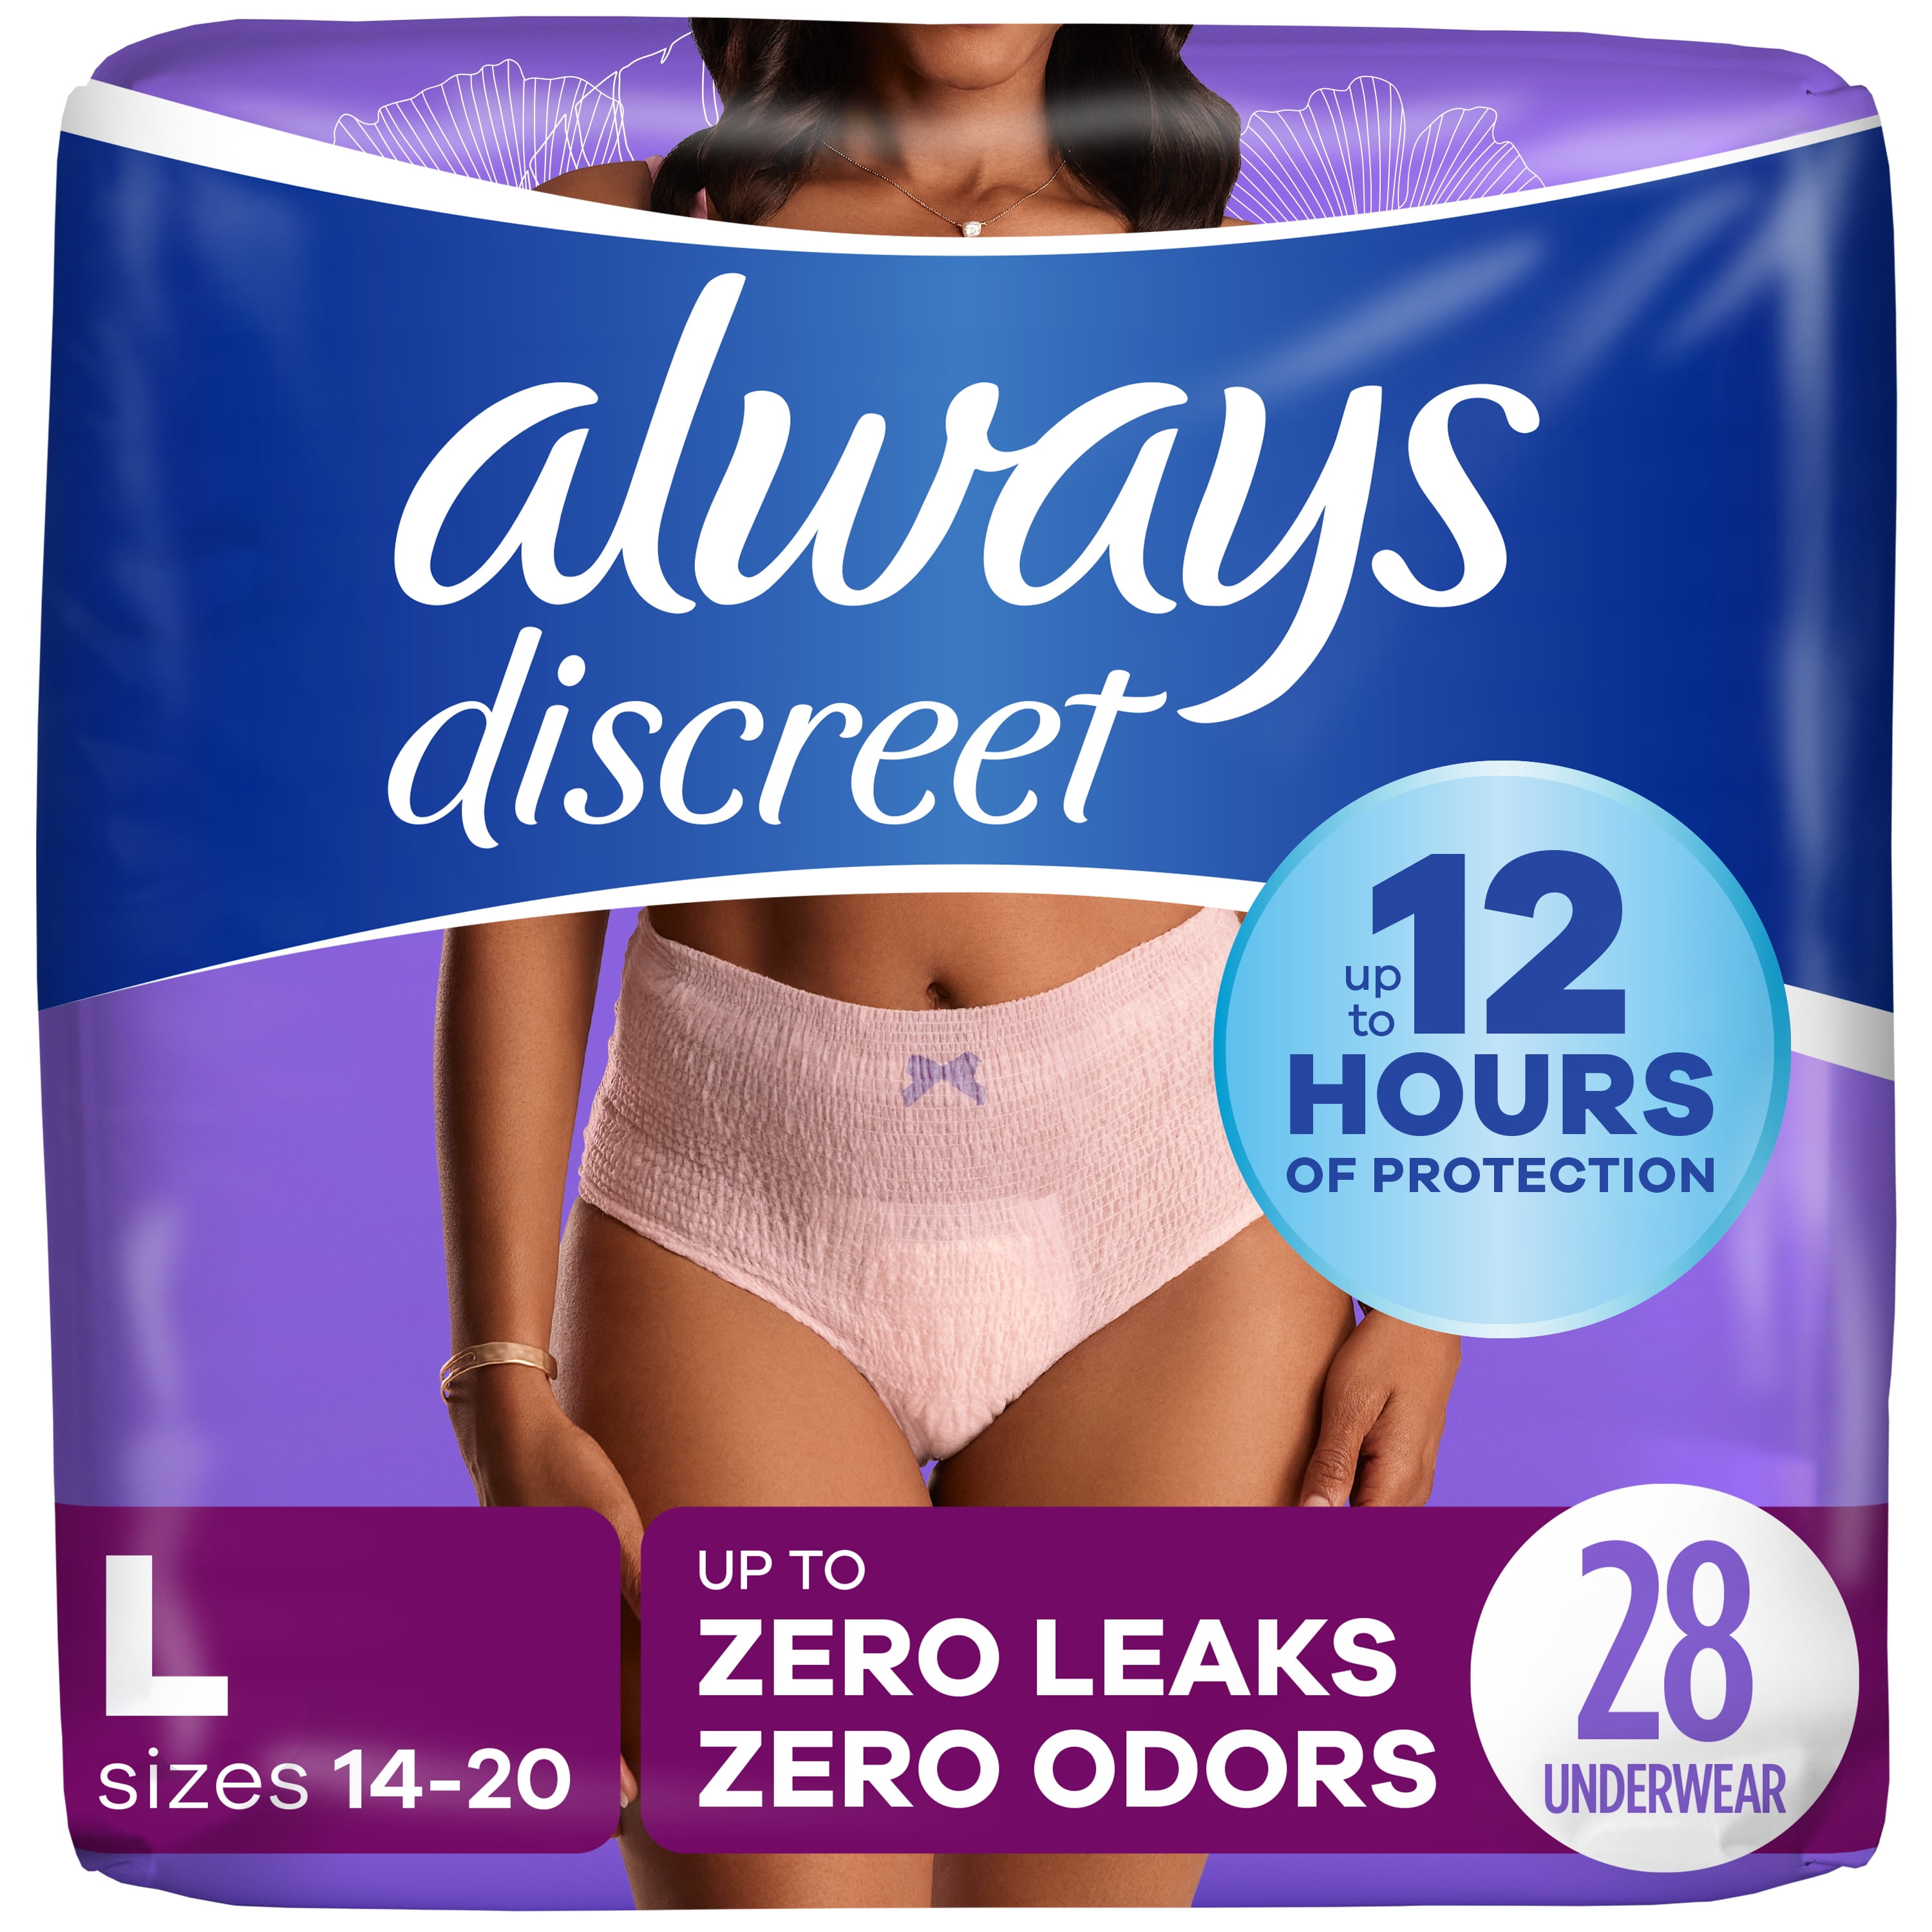 Depend Night Defense Incontinence Overnight Underwear for Women S/M/L/XL ✓